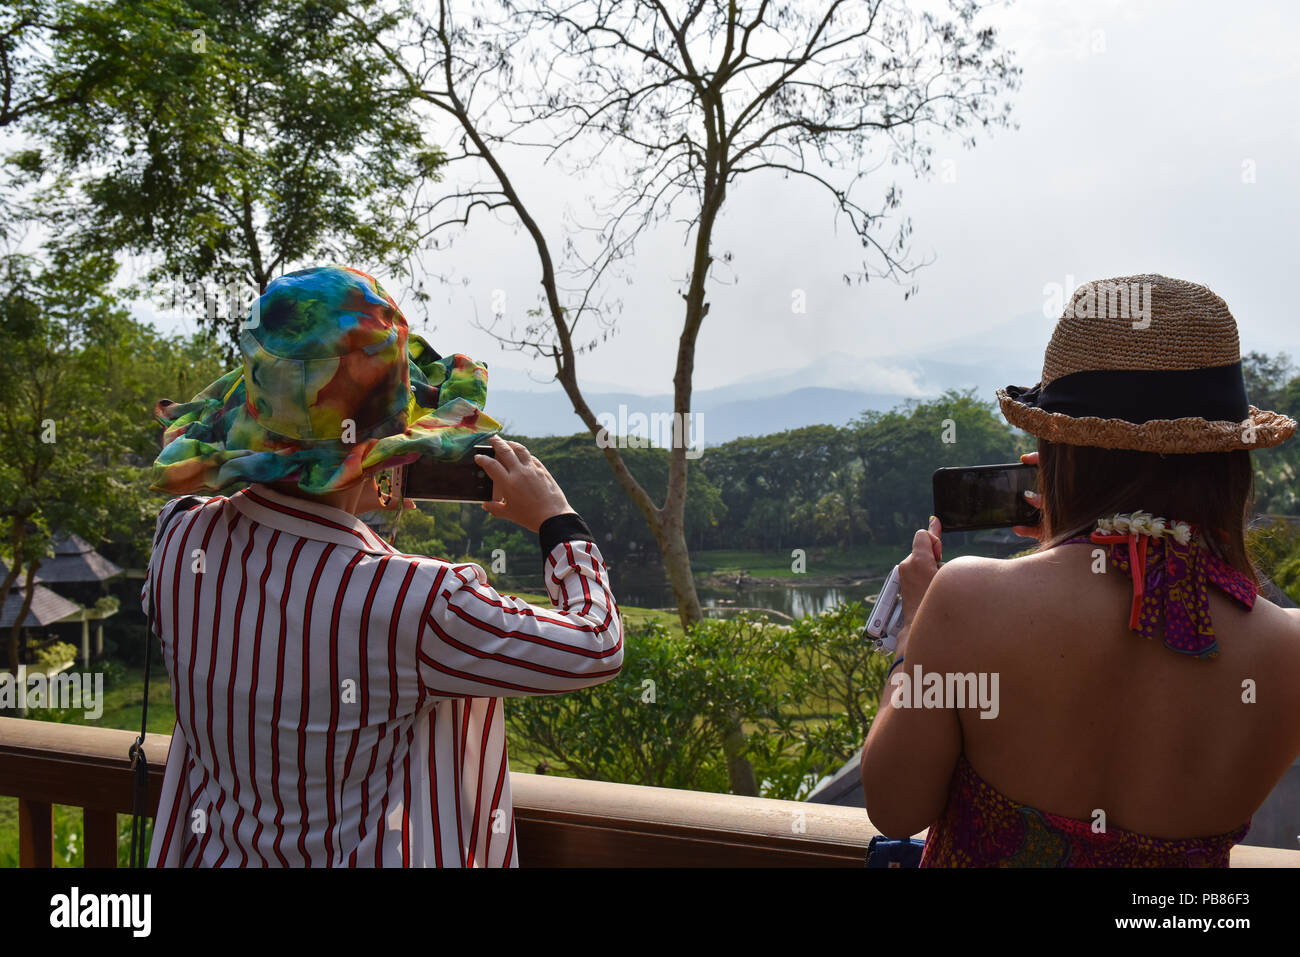 Chinese tourists taking photographs, Thailand Stock Photo